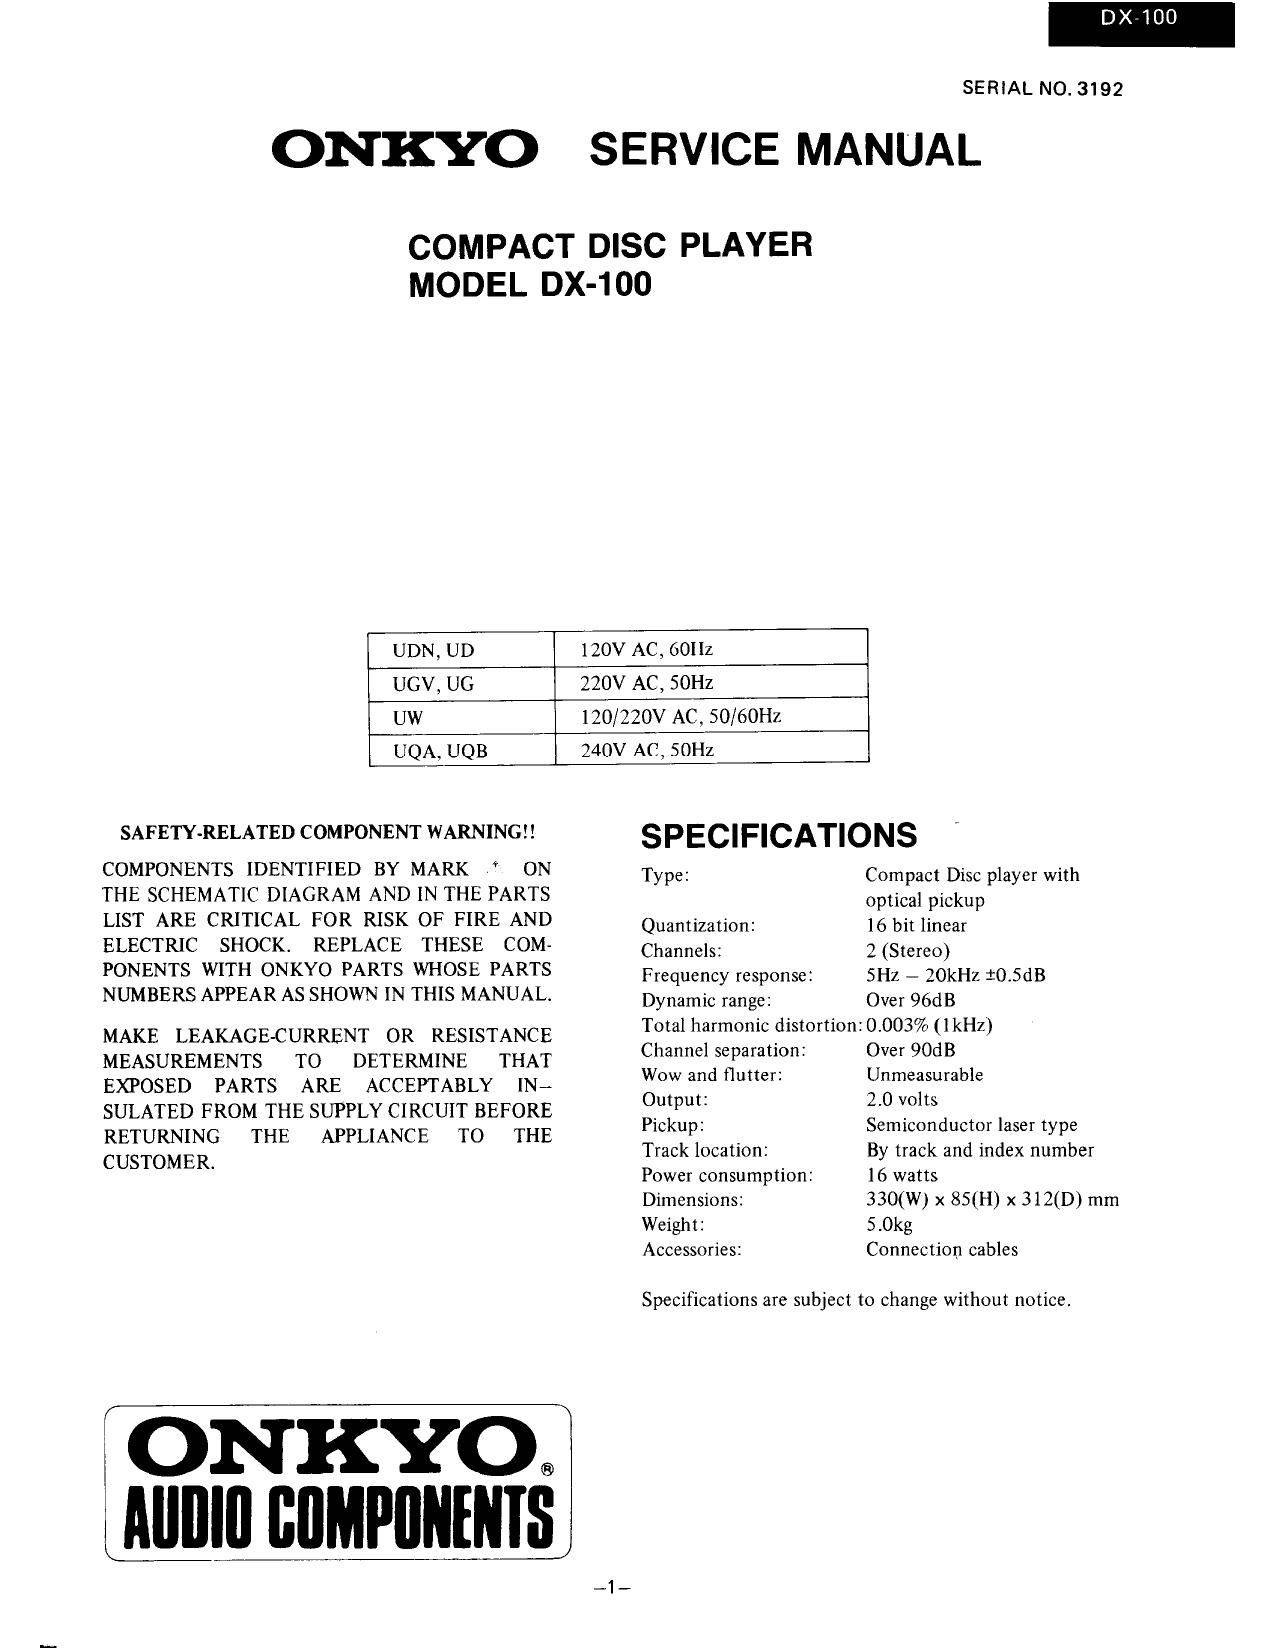 Onkyo DX-100